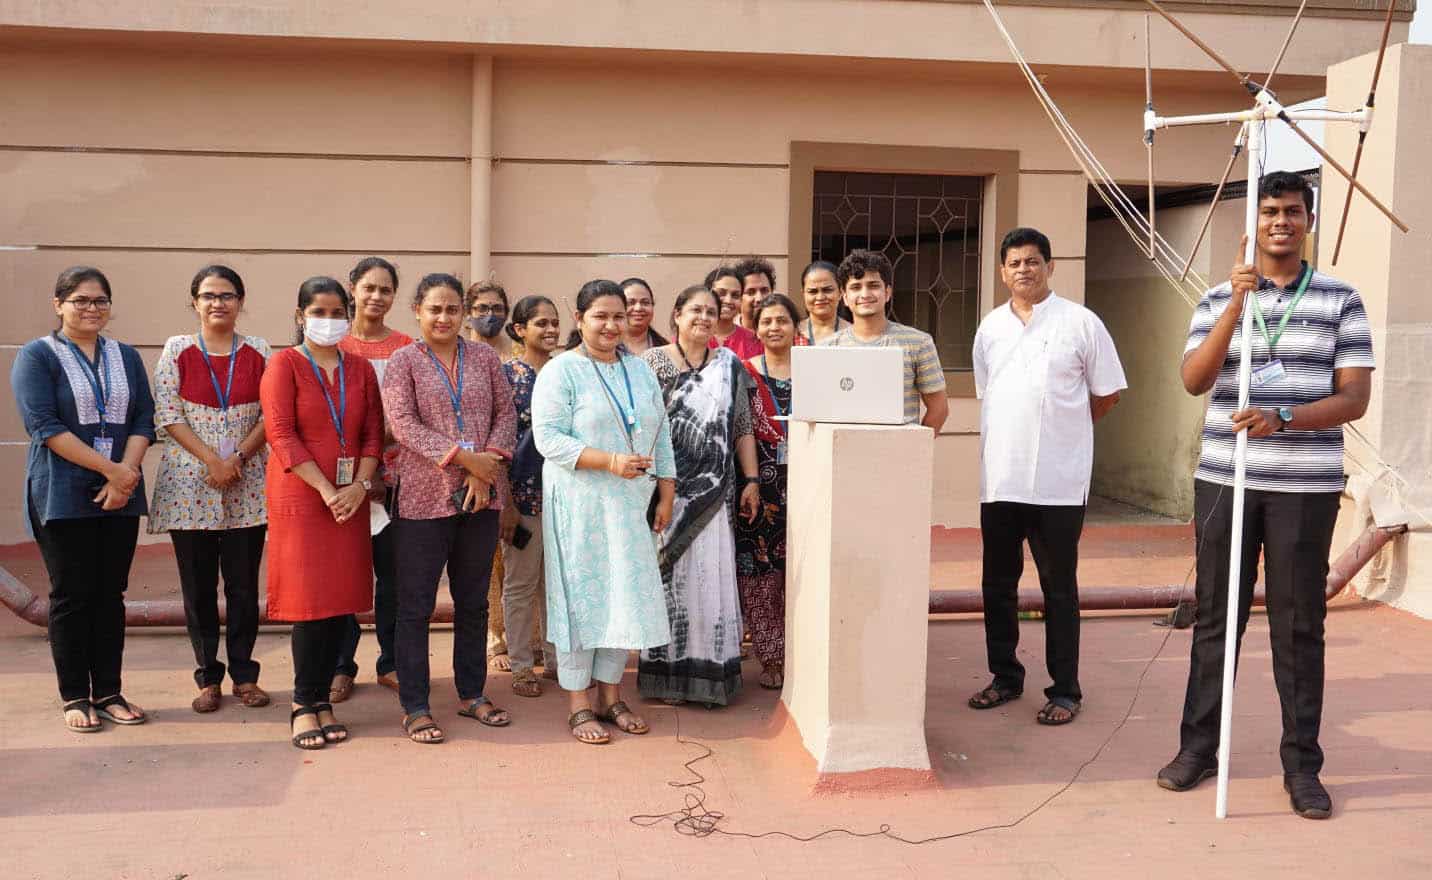 DBCE Team and Parikarma satillite club at launch of ground satellite station